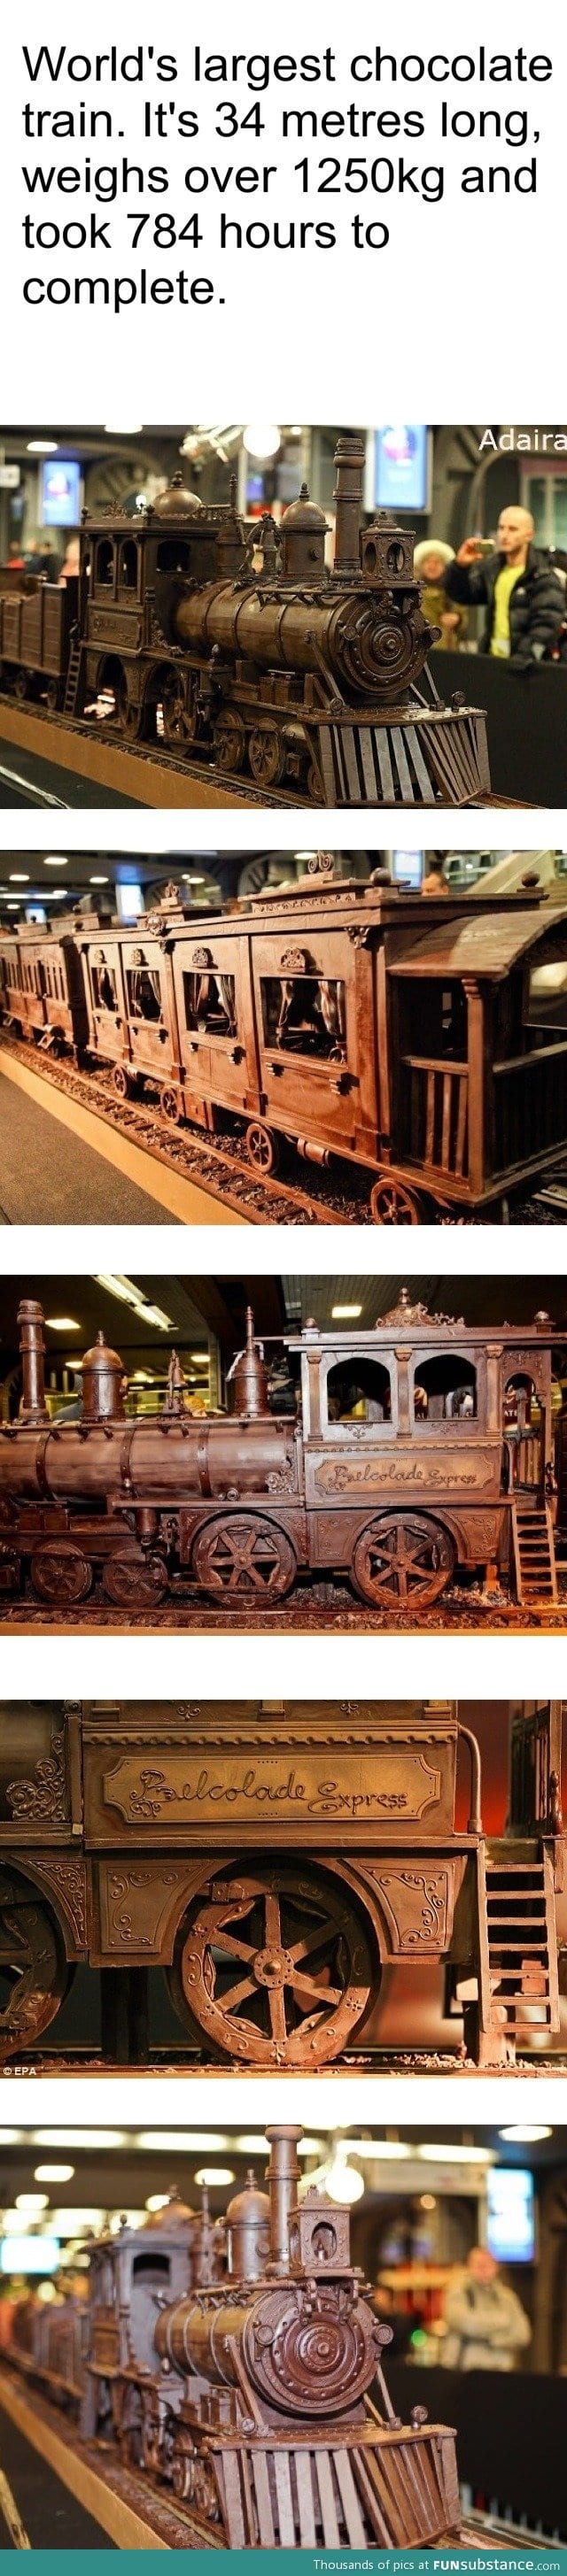 Chocolate train